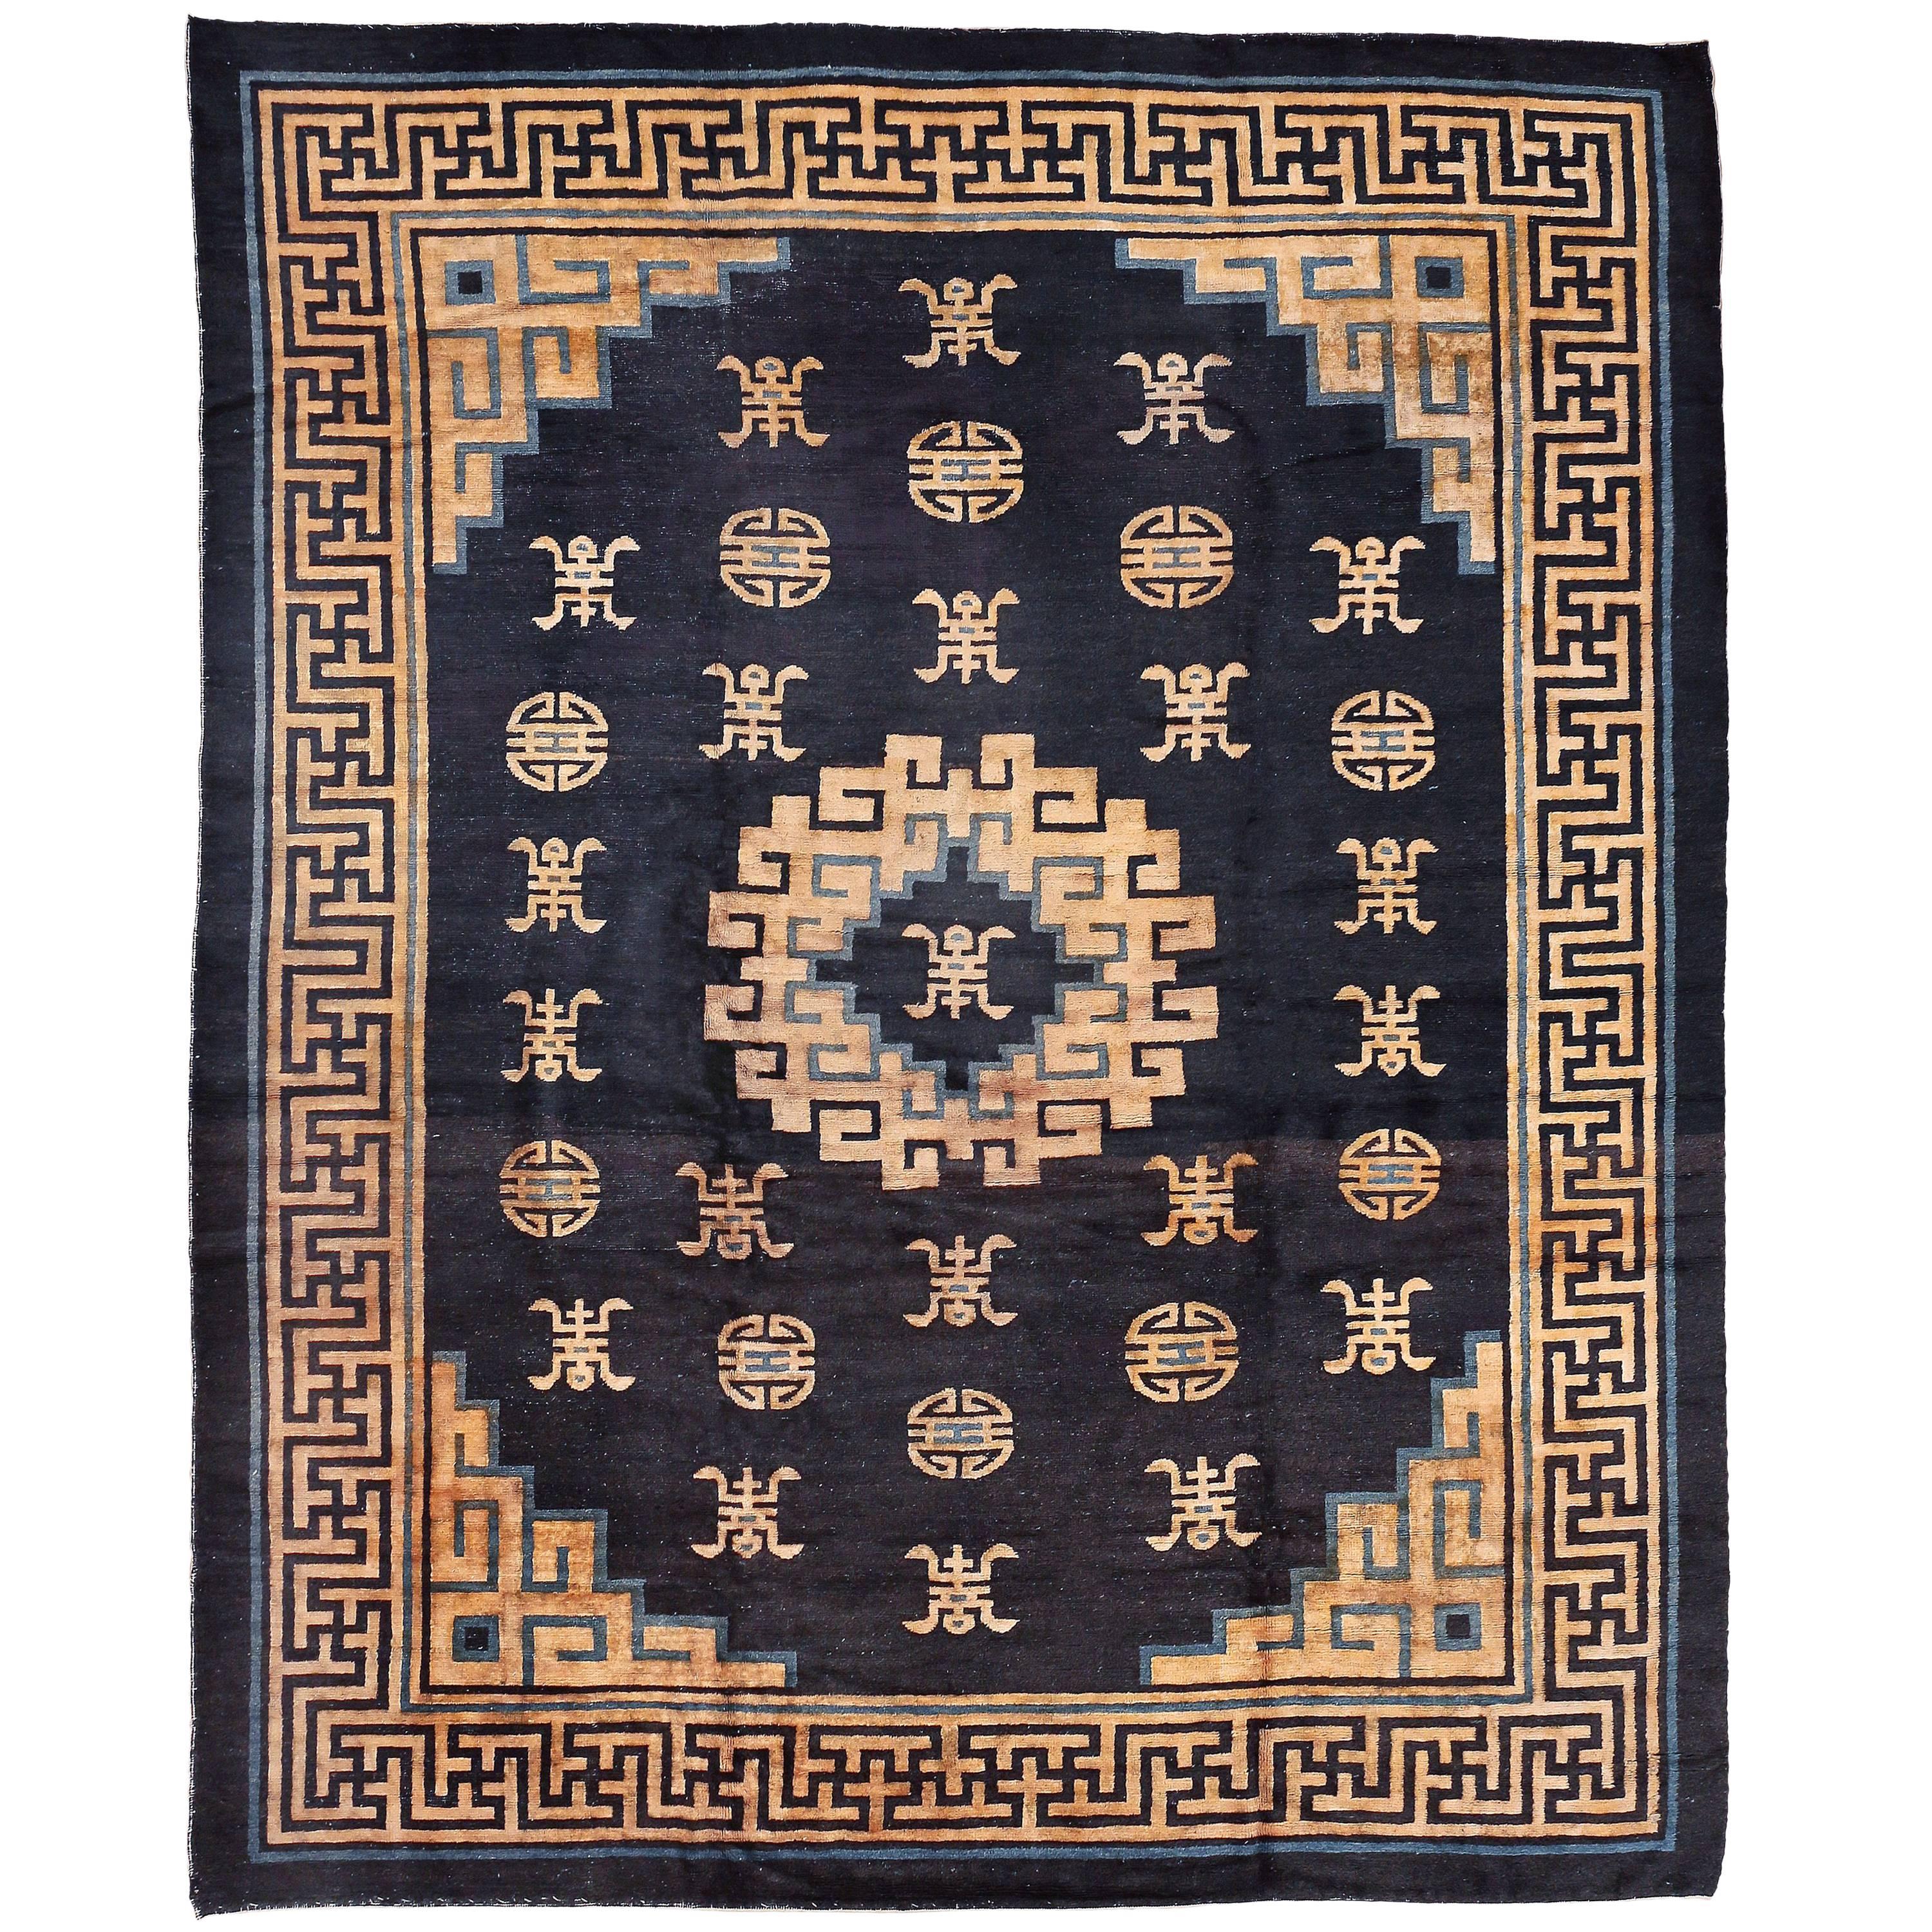 Antique Mongolian Chinese Carpet with Longevity Motifs